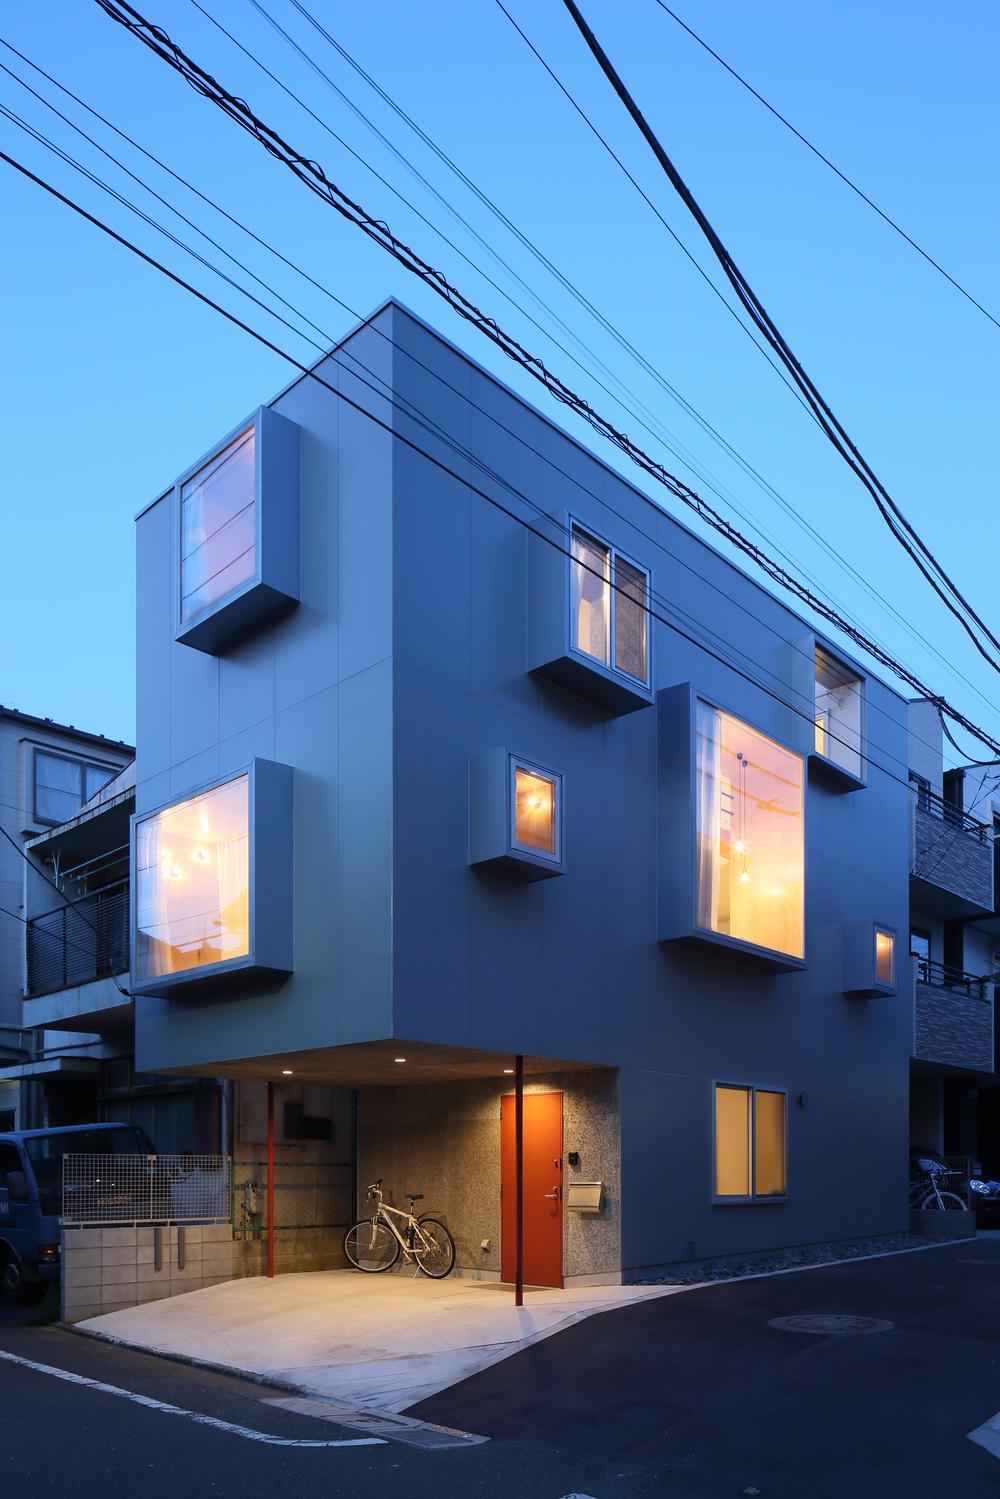 Image of "マドノスミカ", the work by architect : Ryu Mitarai (image number 14)